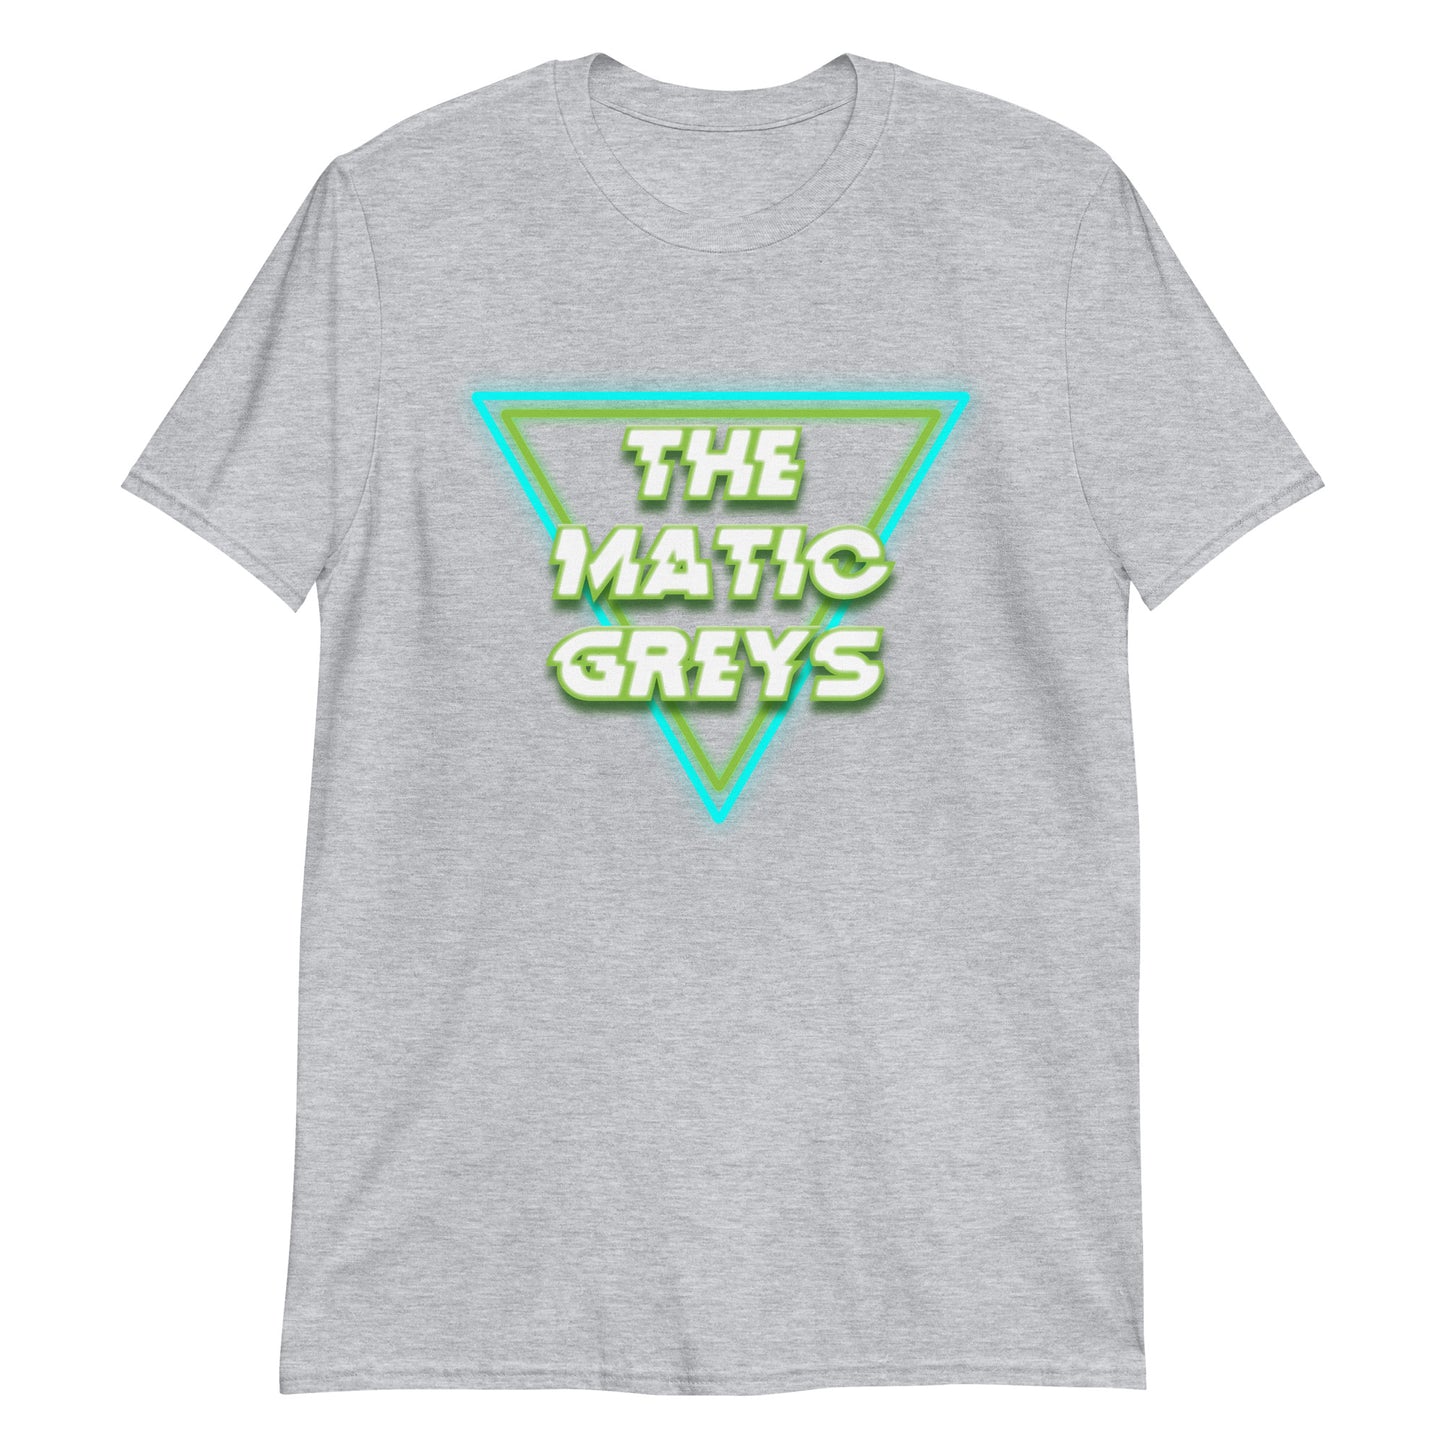 TheMaticGreys 80s Style Short-Sleeve Unisex T-Shirt